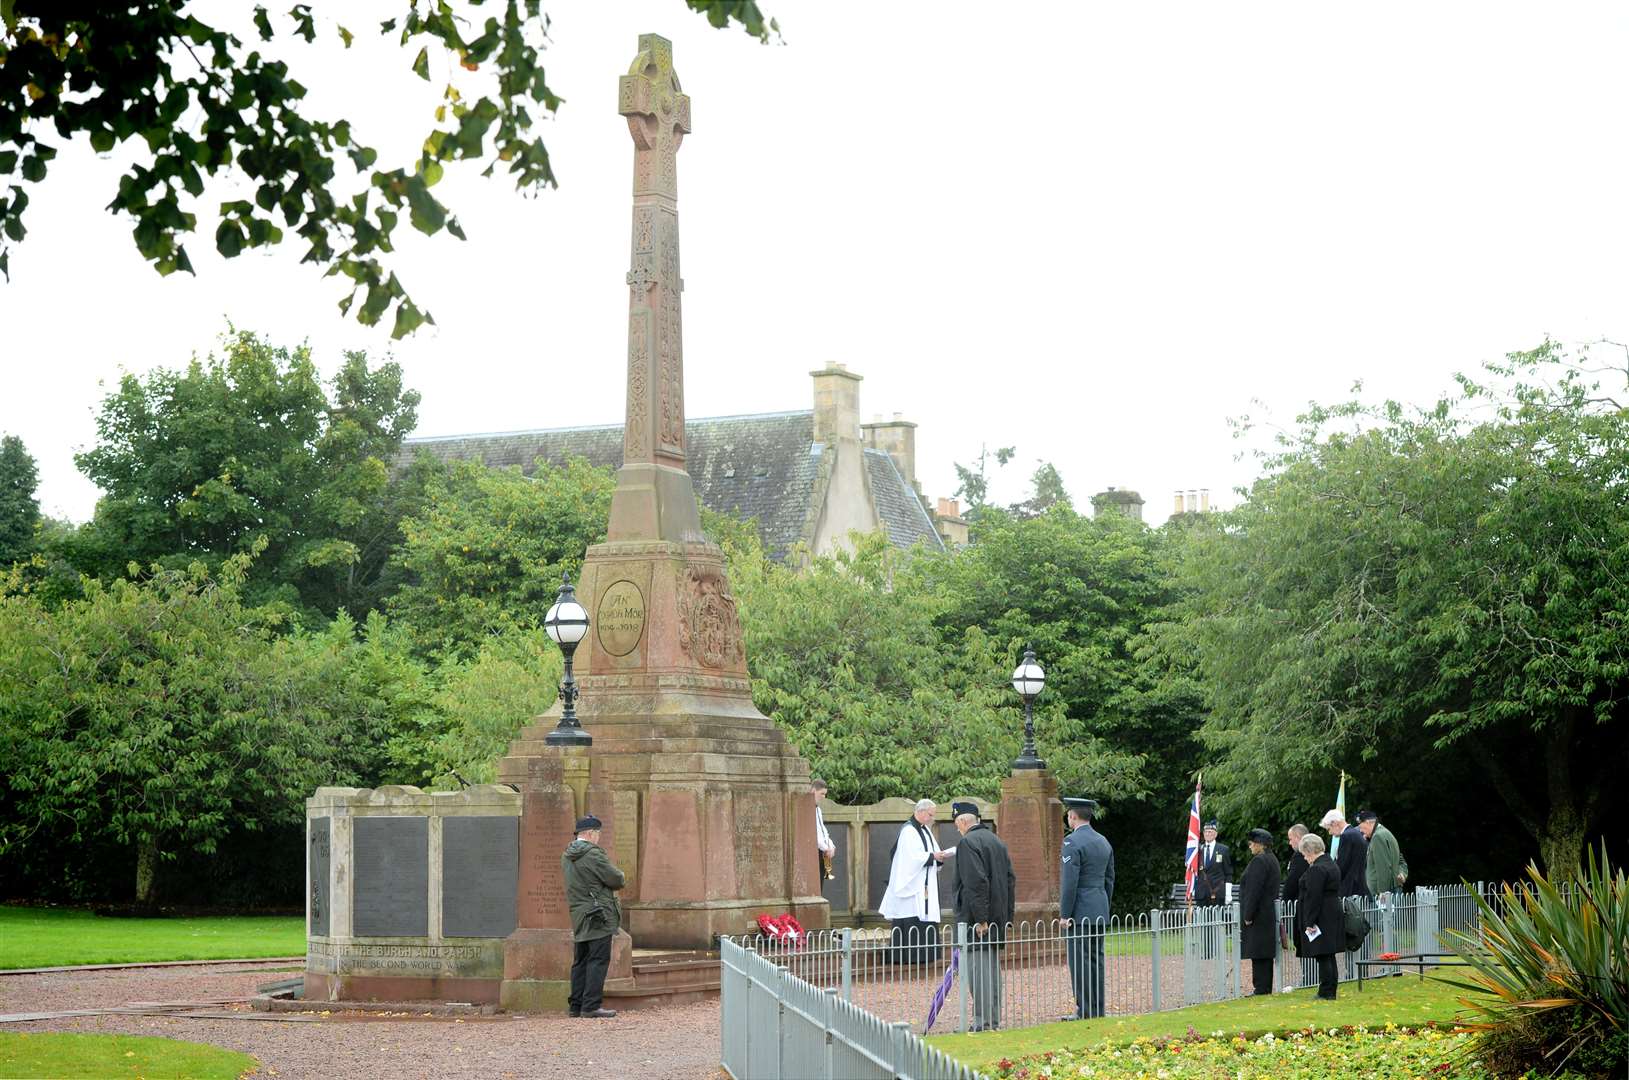 The War Memorial in Cavell Gardens.